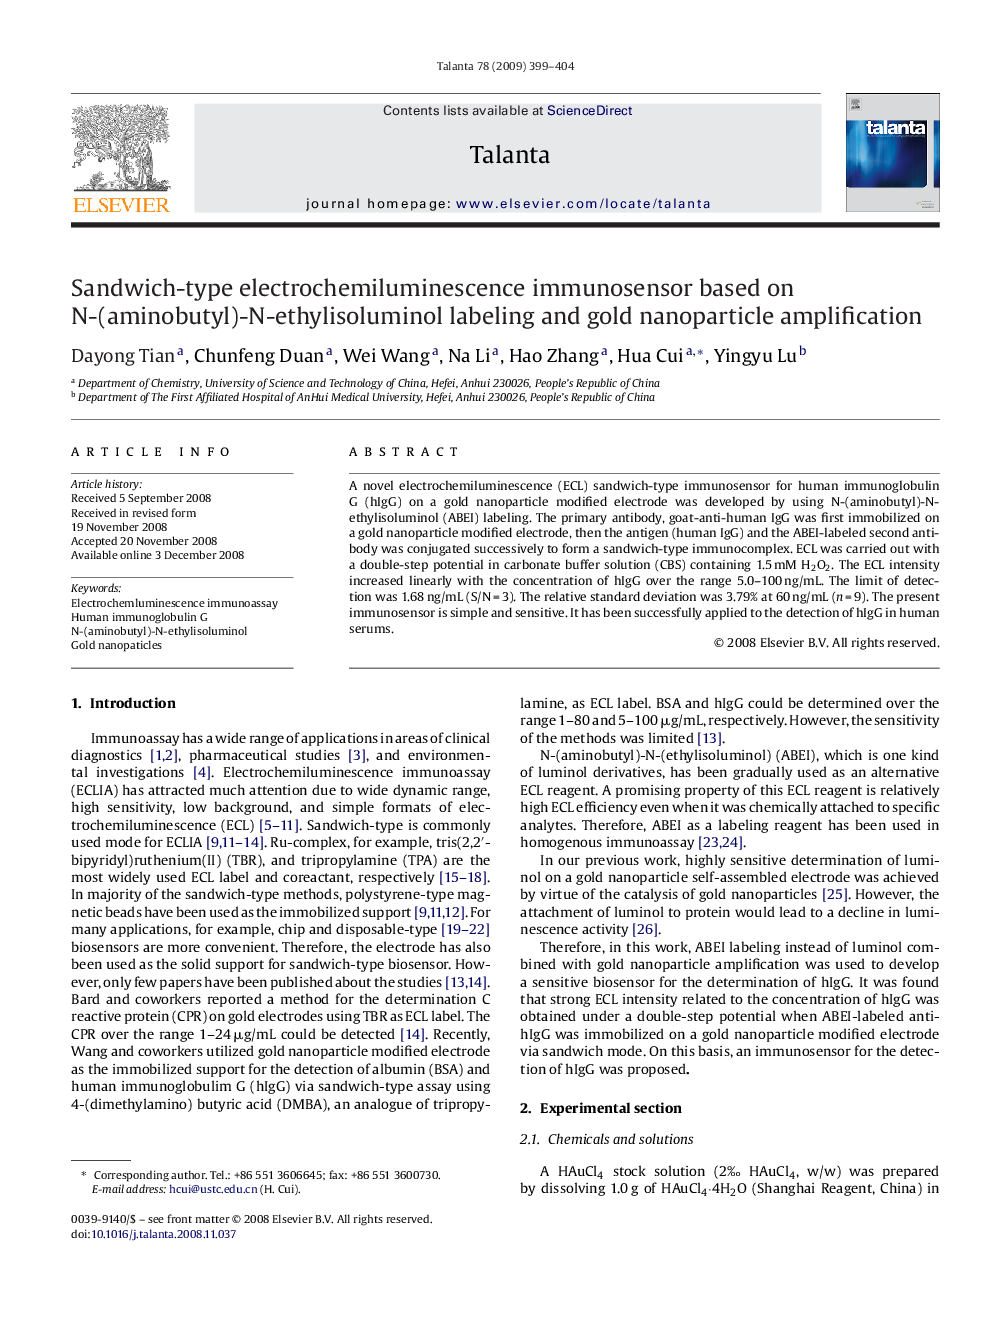 Sandwich-type electrochemiluminescence immunosensor based on N-(aminobutyl)-N-ethylisoluminol labeling and gold nanoparticle amplification